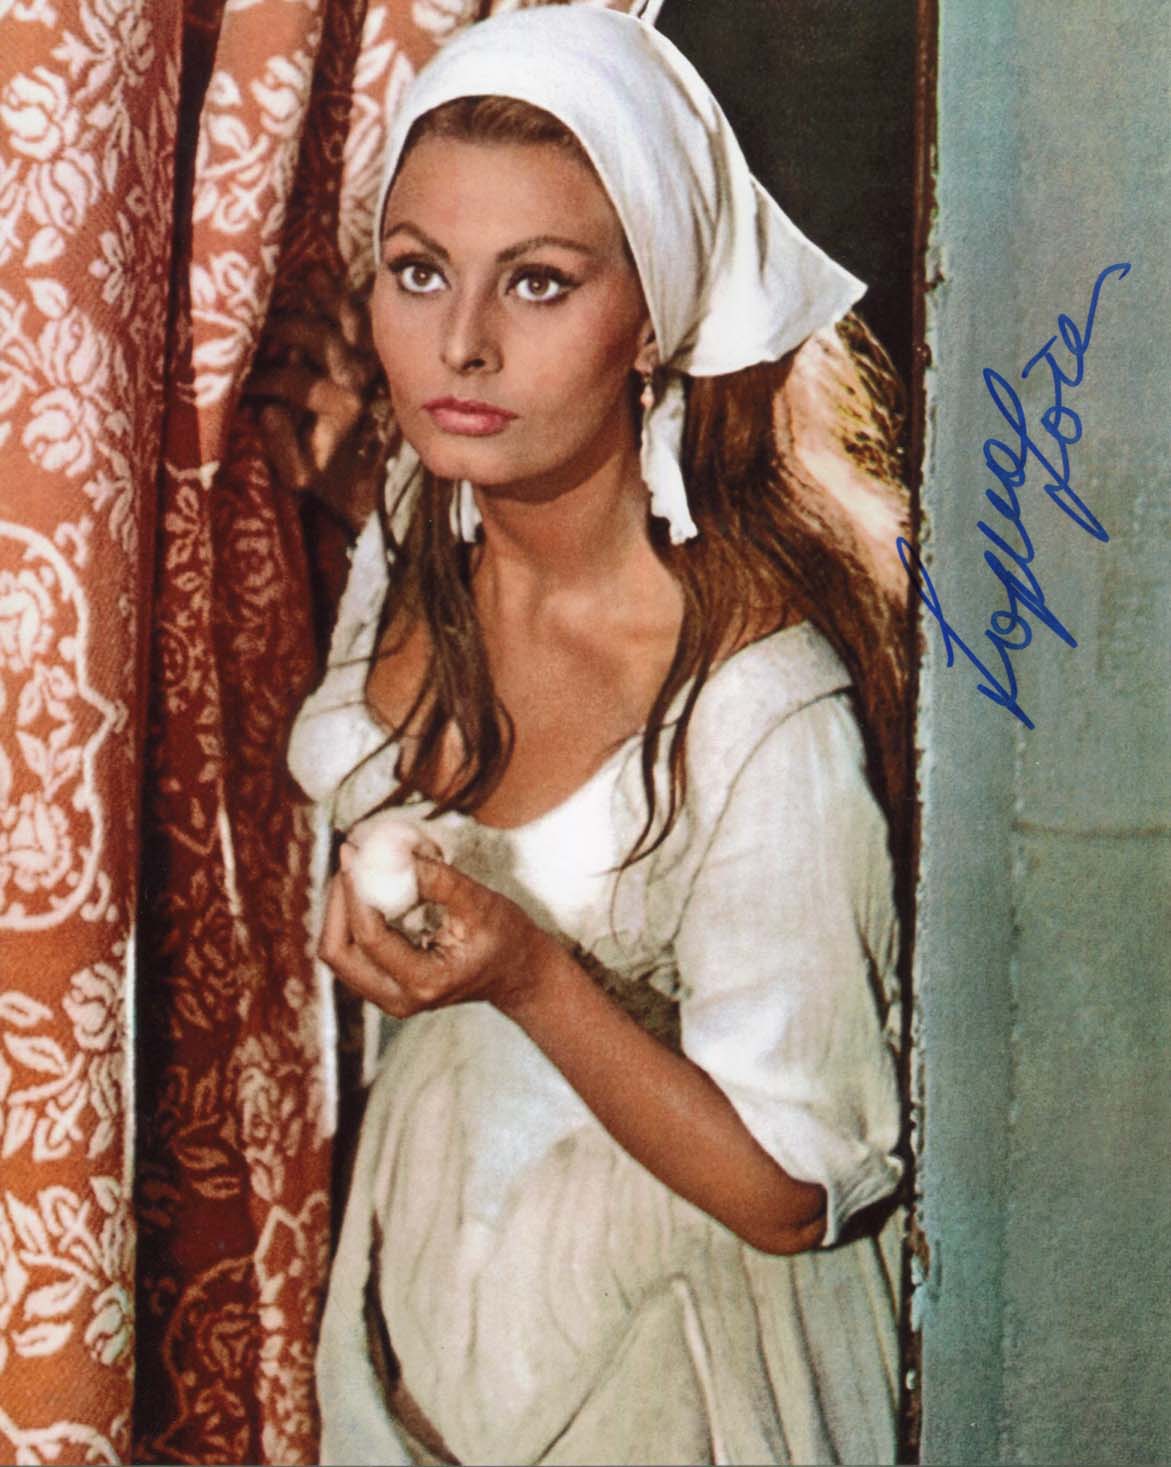 Sophia Loren Autograph Autogramm | ID 8087939383445